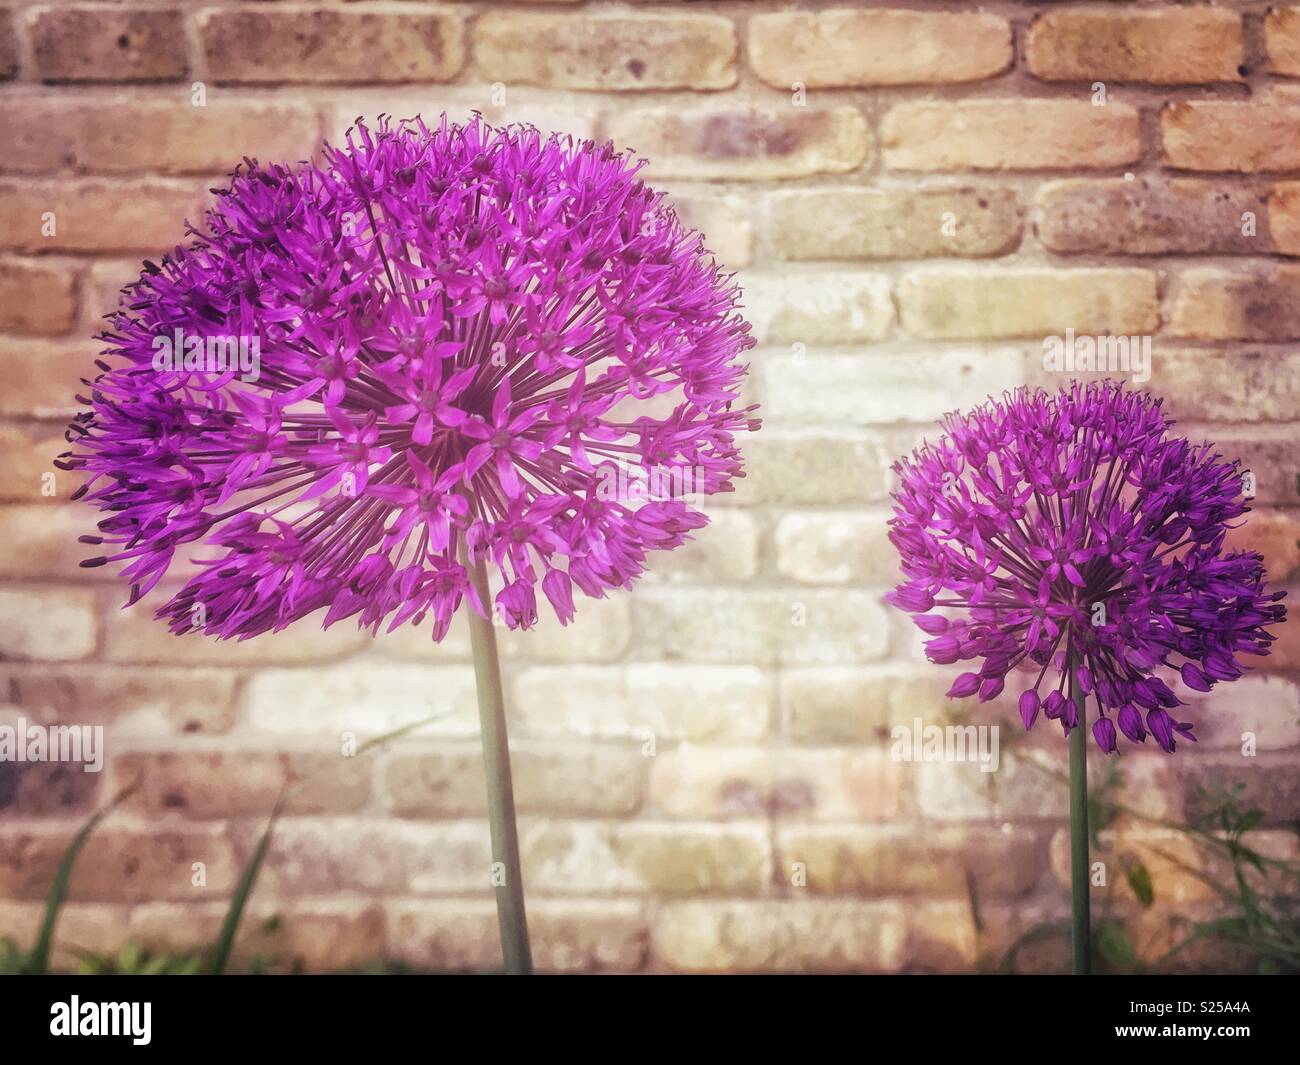 Alliums against a brick wall. Stock Photo